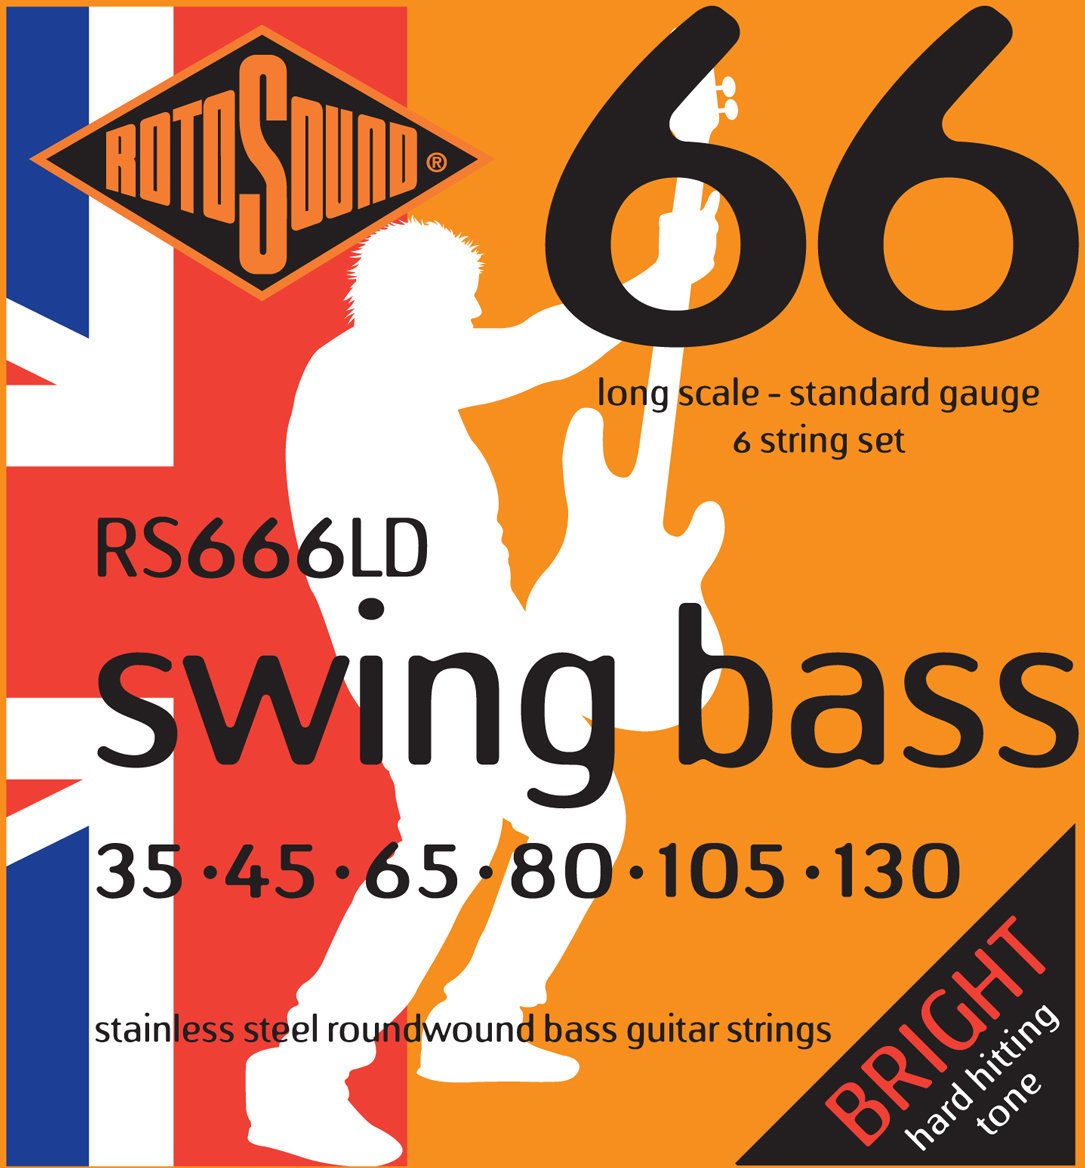 Bassguitar strings Rotosound RS 666 LD